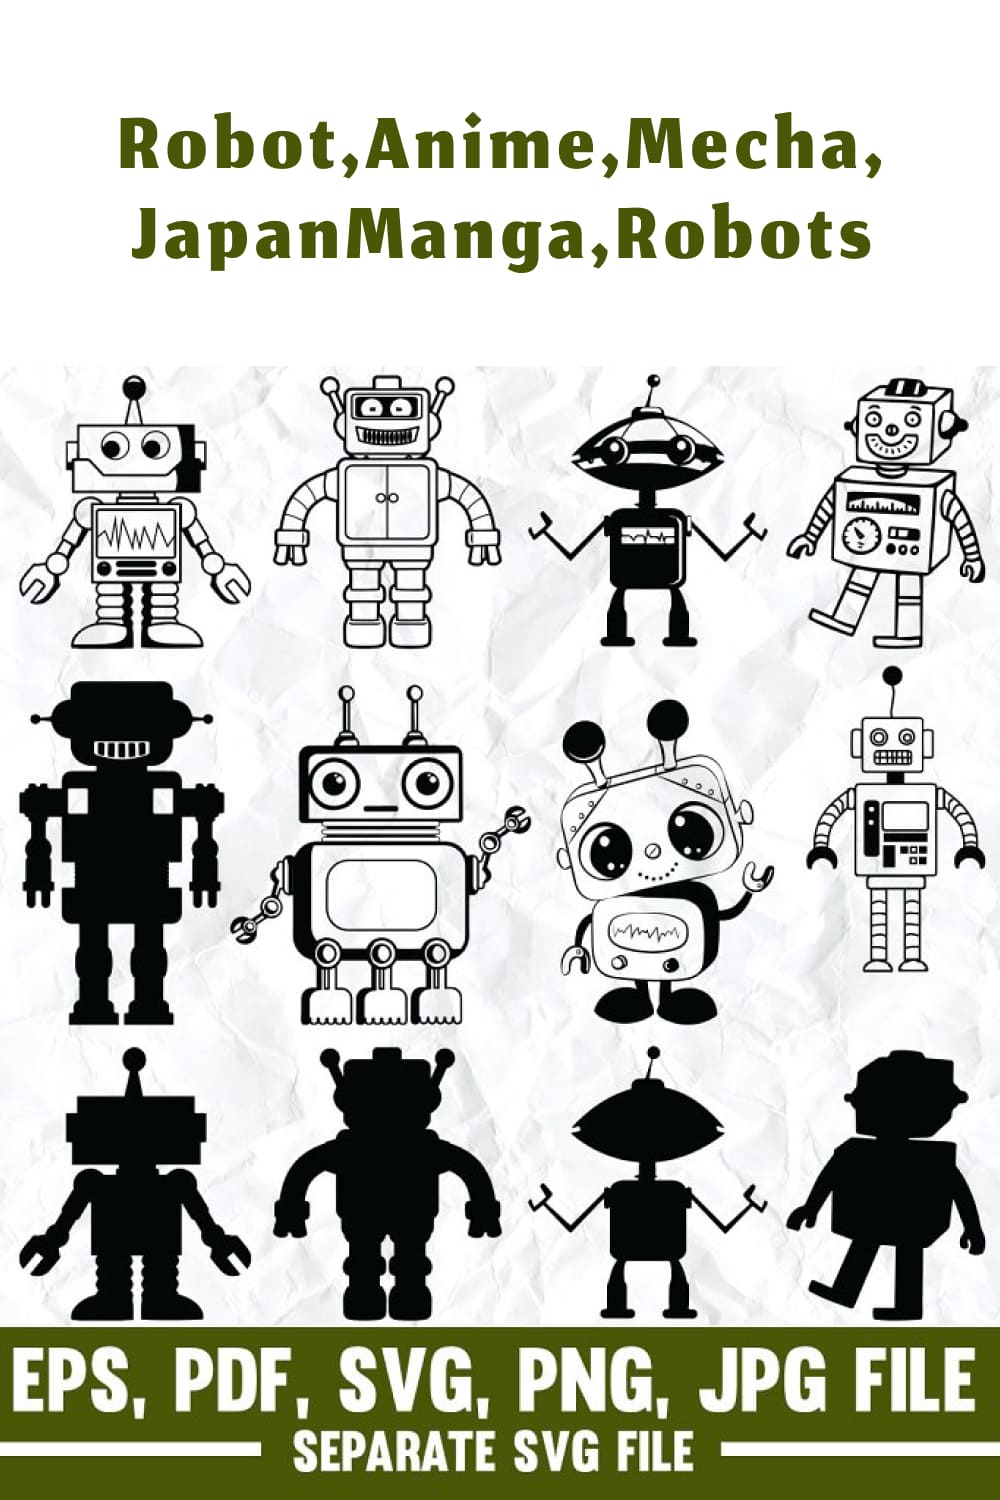 Robot, Anime, Mecha, JapanManga, Robots - Pinterest.